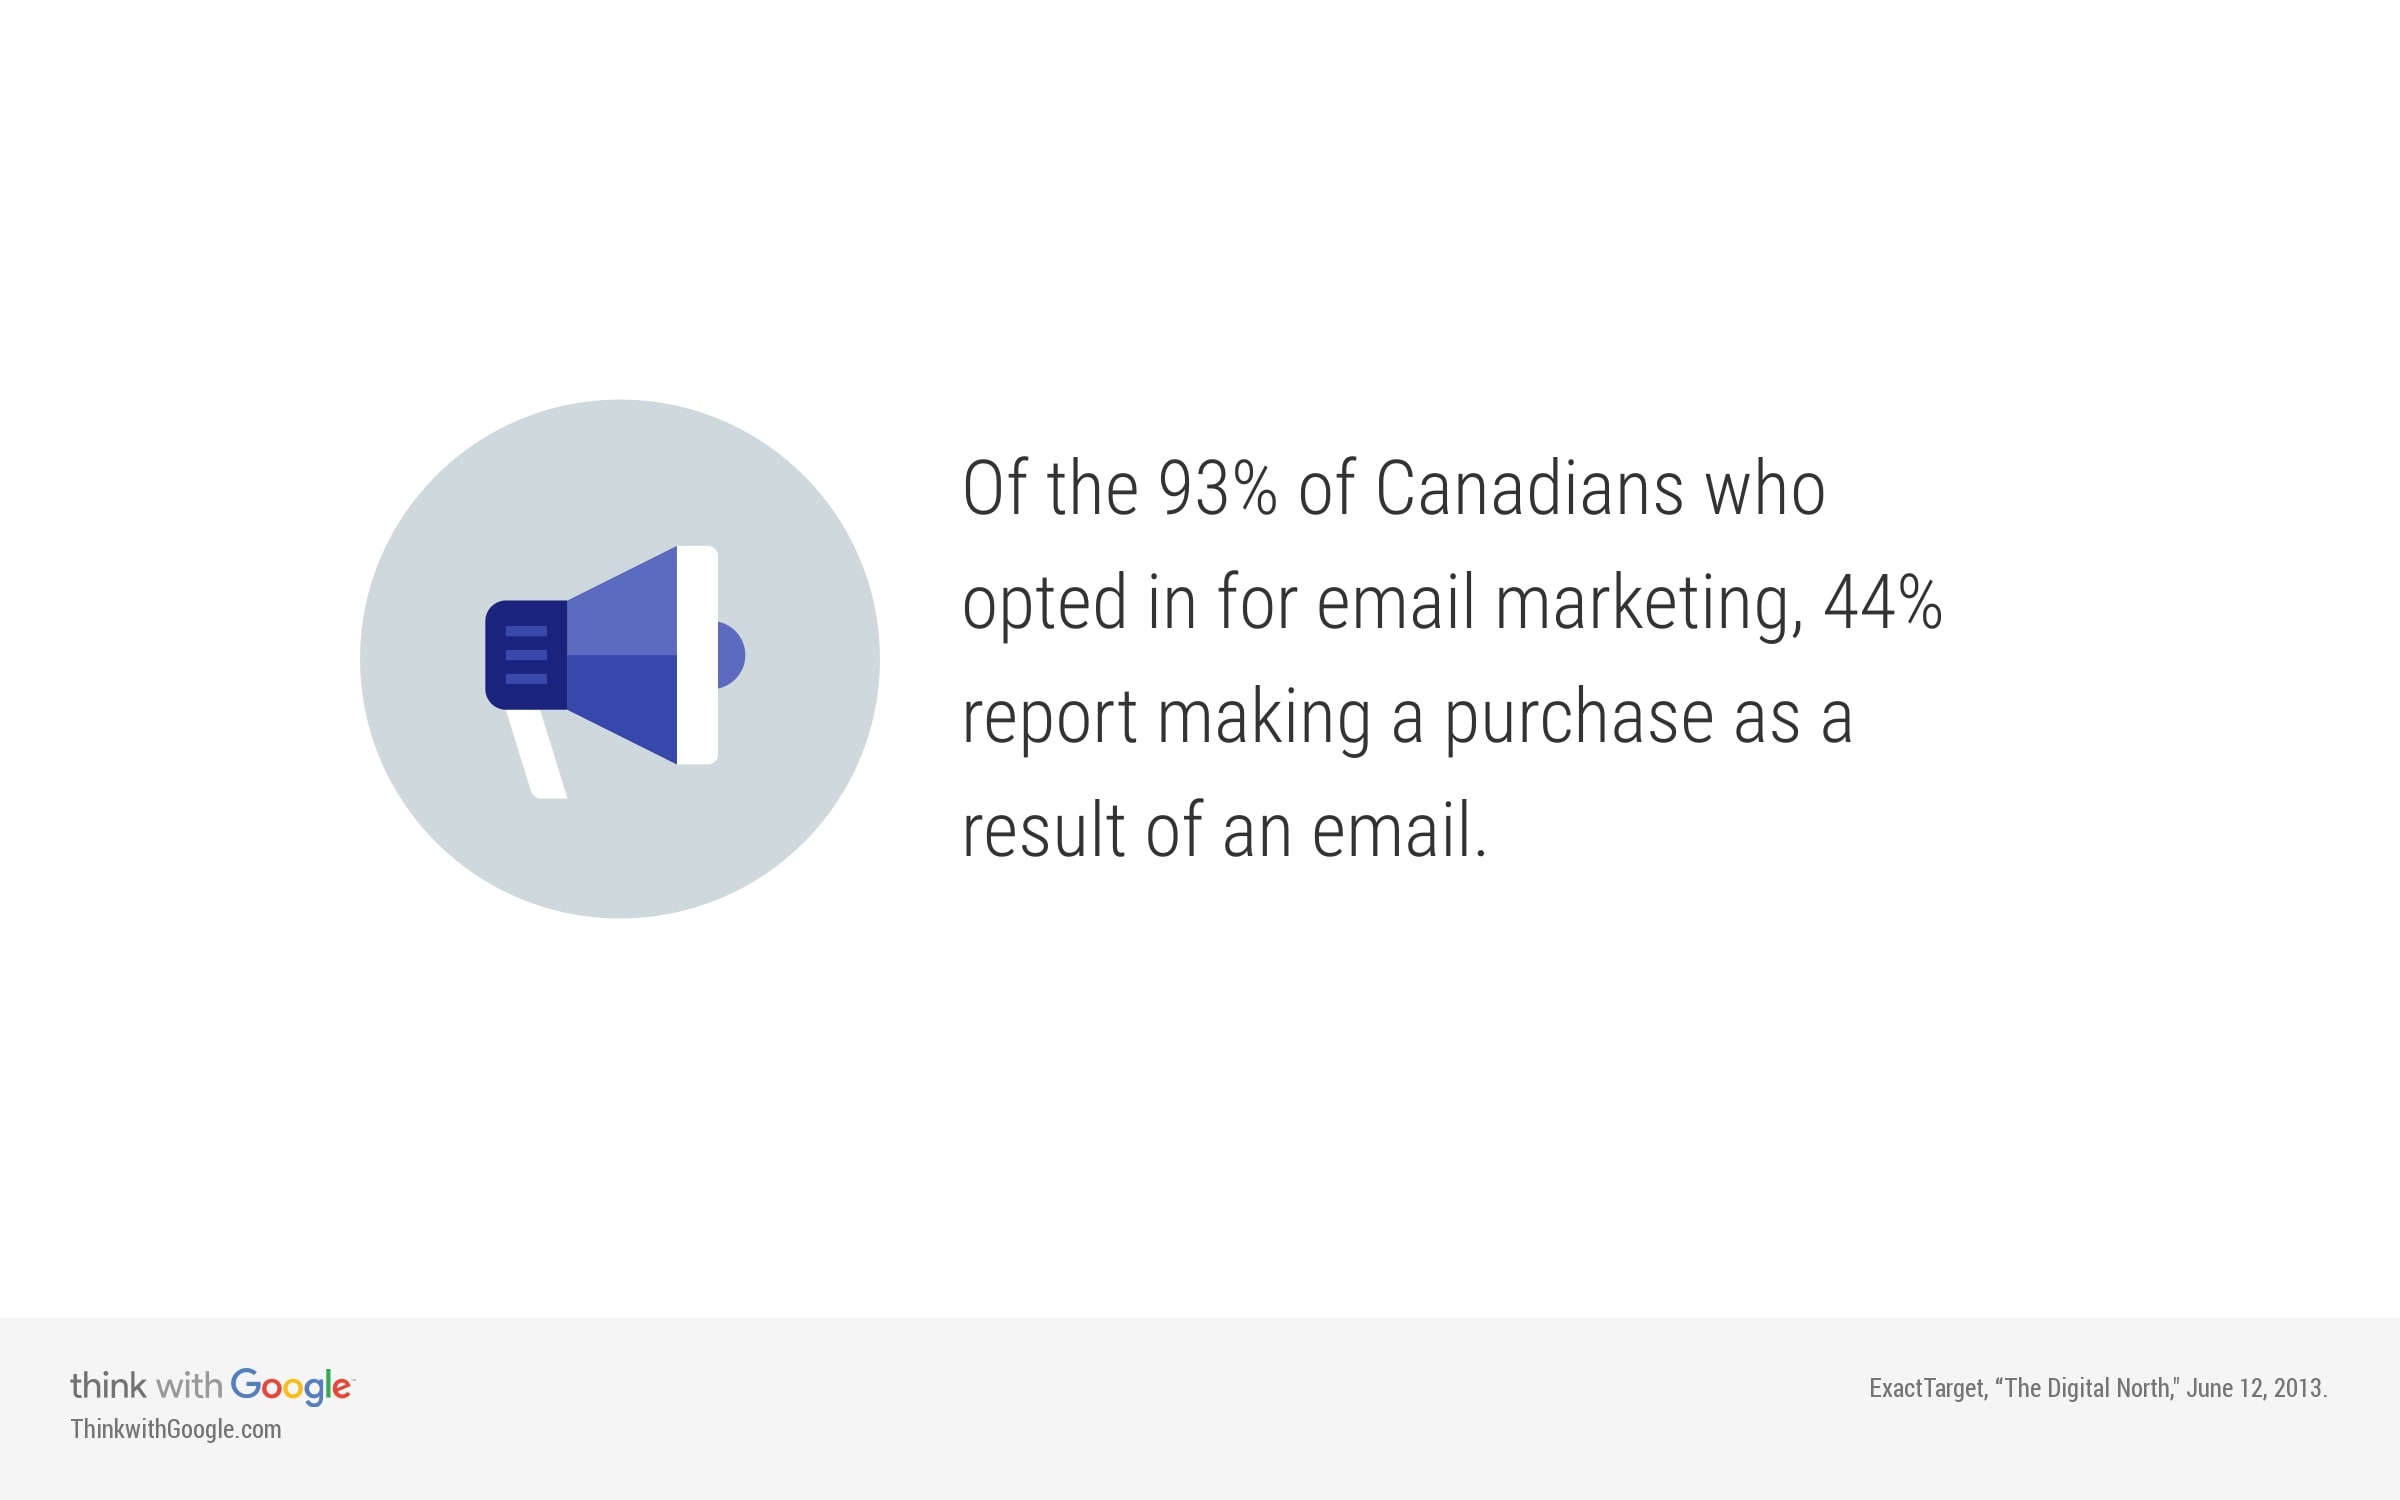 Email Marketing Effectiveness Statistics